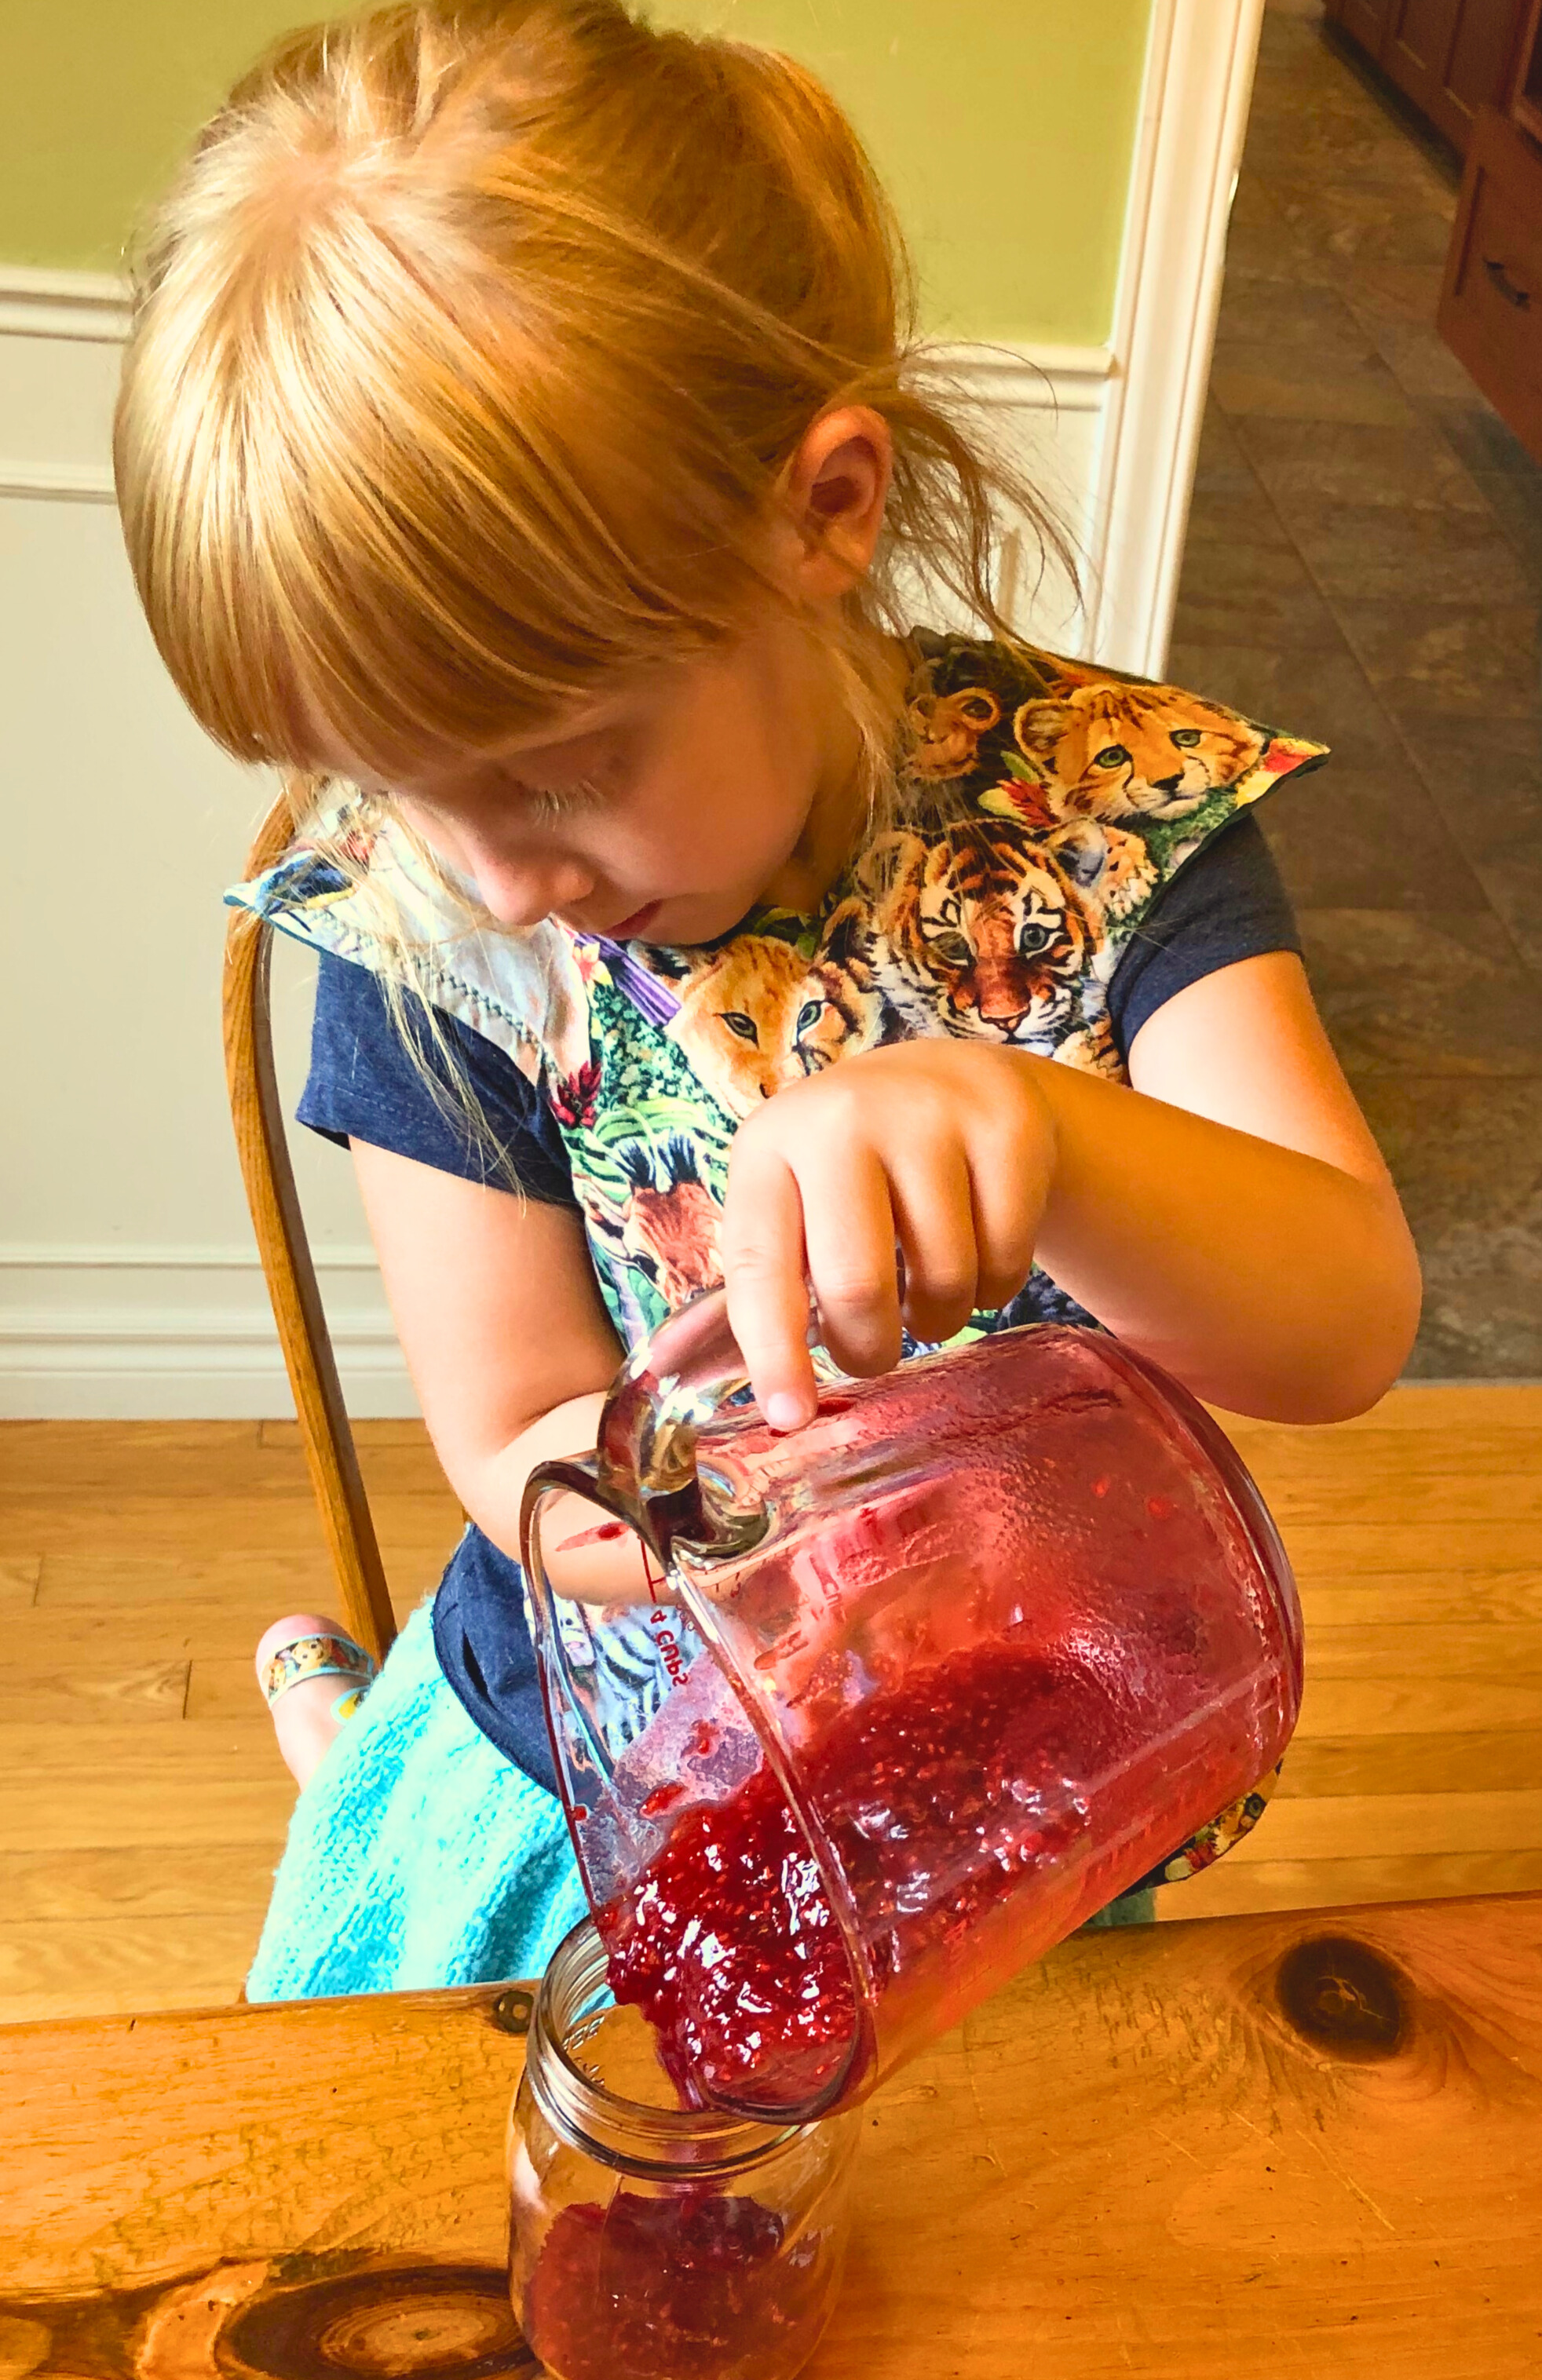 A little girl pouring raspberry jam into a jam jar.